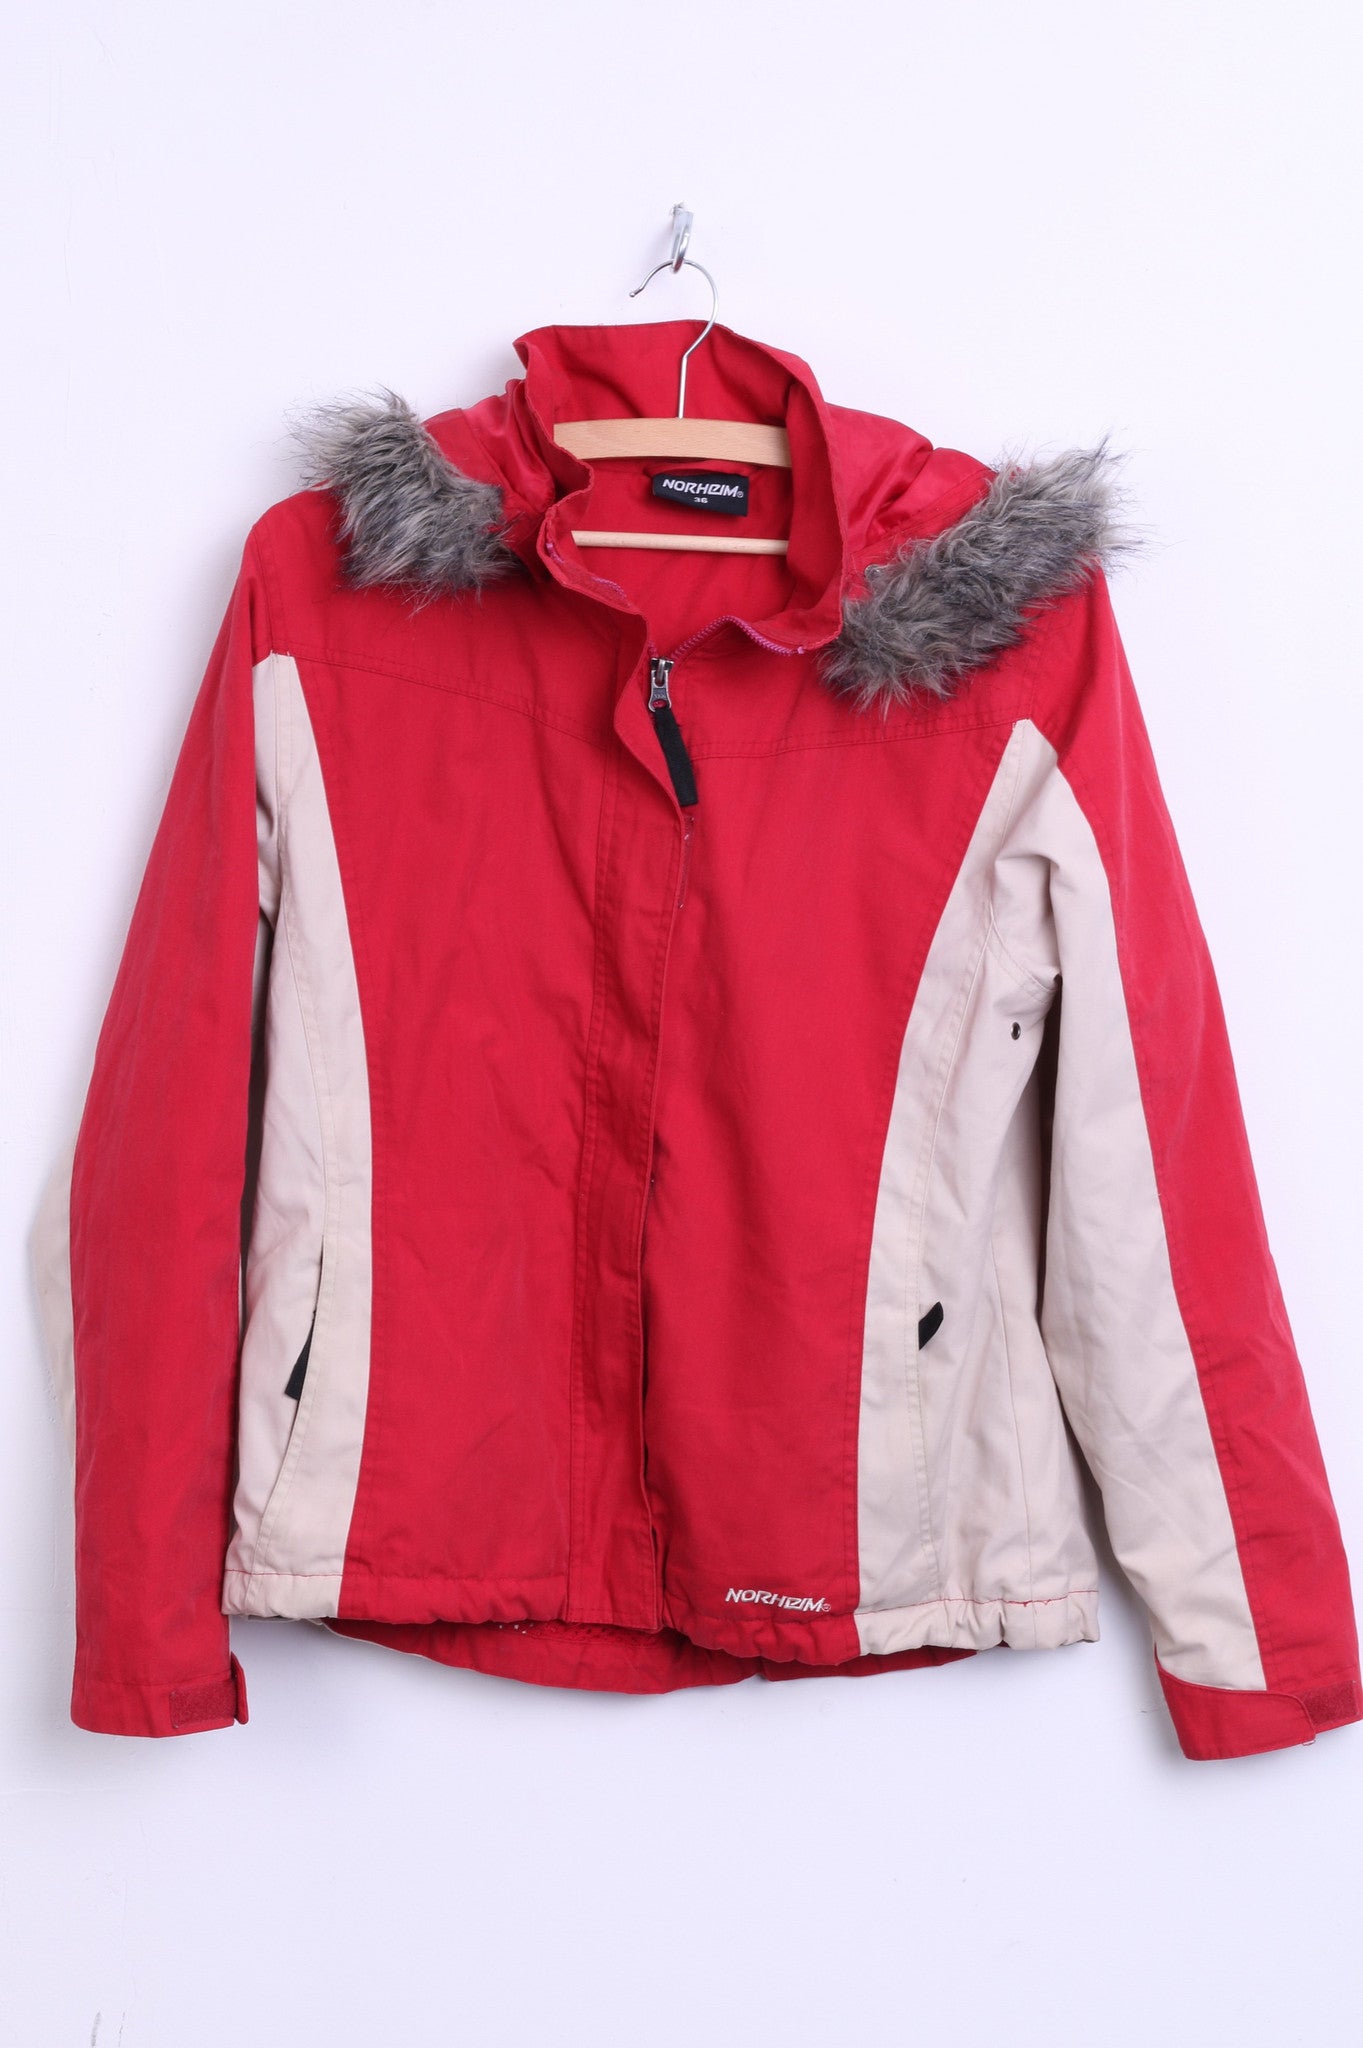 Norheim Womens S/M Jacket Hood Red Cream Sides Fur On The Hood - RetrospectClothes